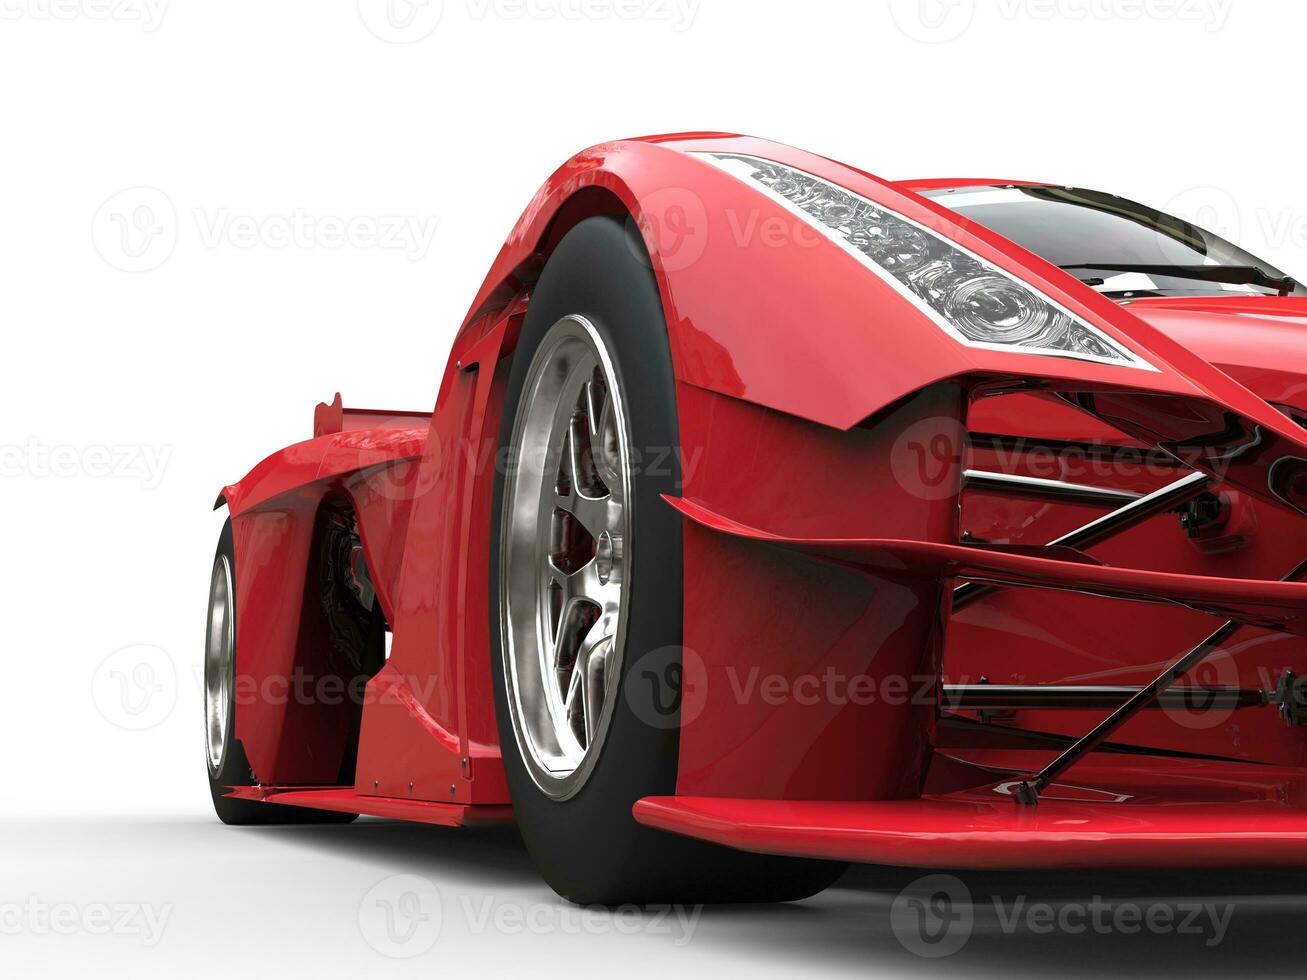 boos rood super ras auto - voorkant visie laag hoek schot foto